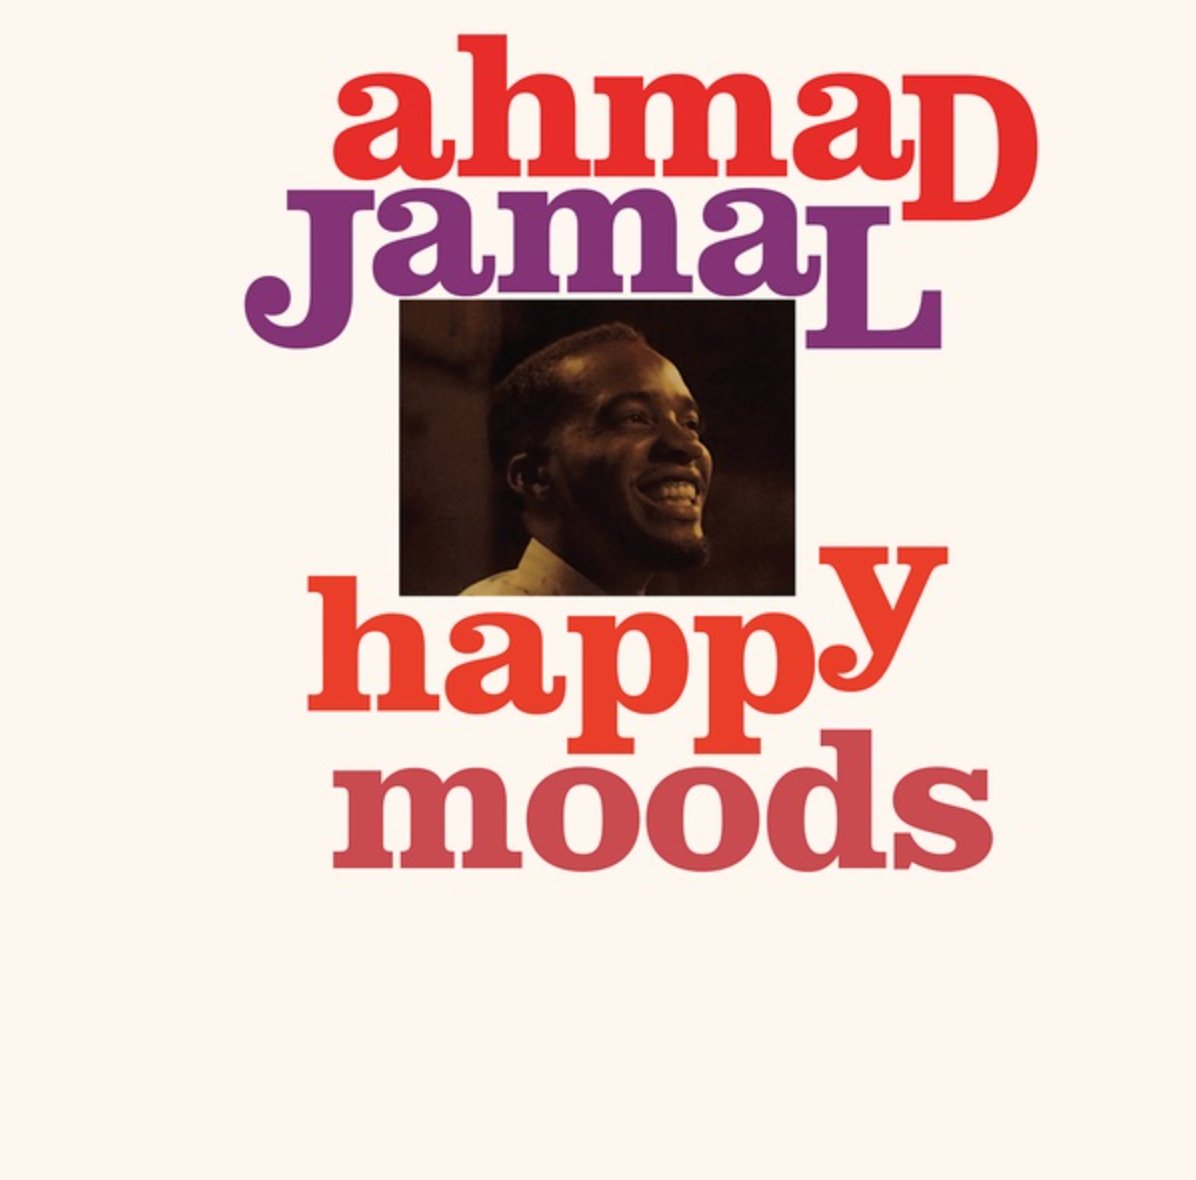 Ahmad Jamal - Happy Moods - Inner Ocean Records